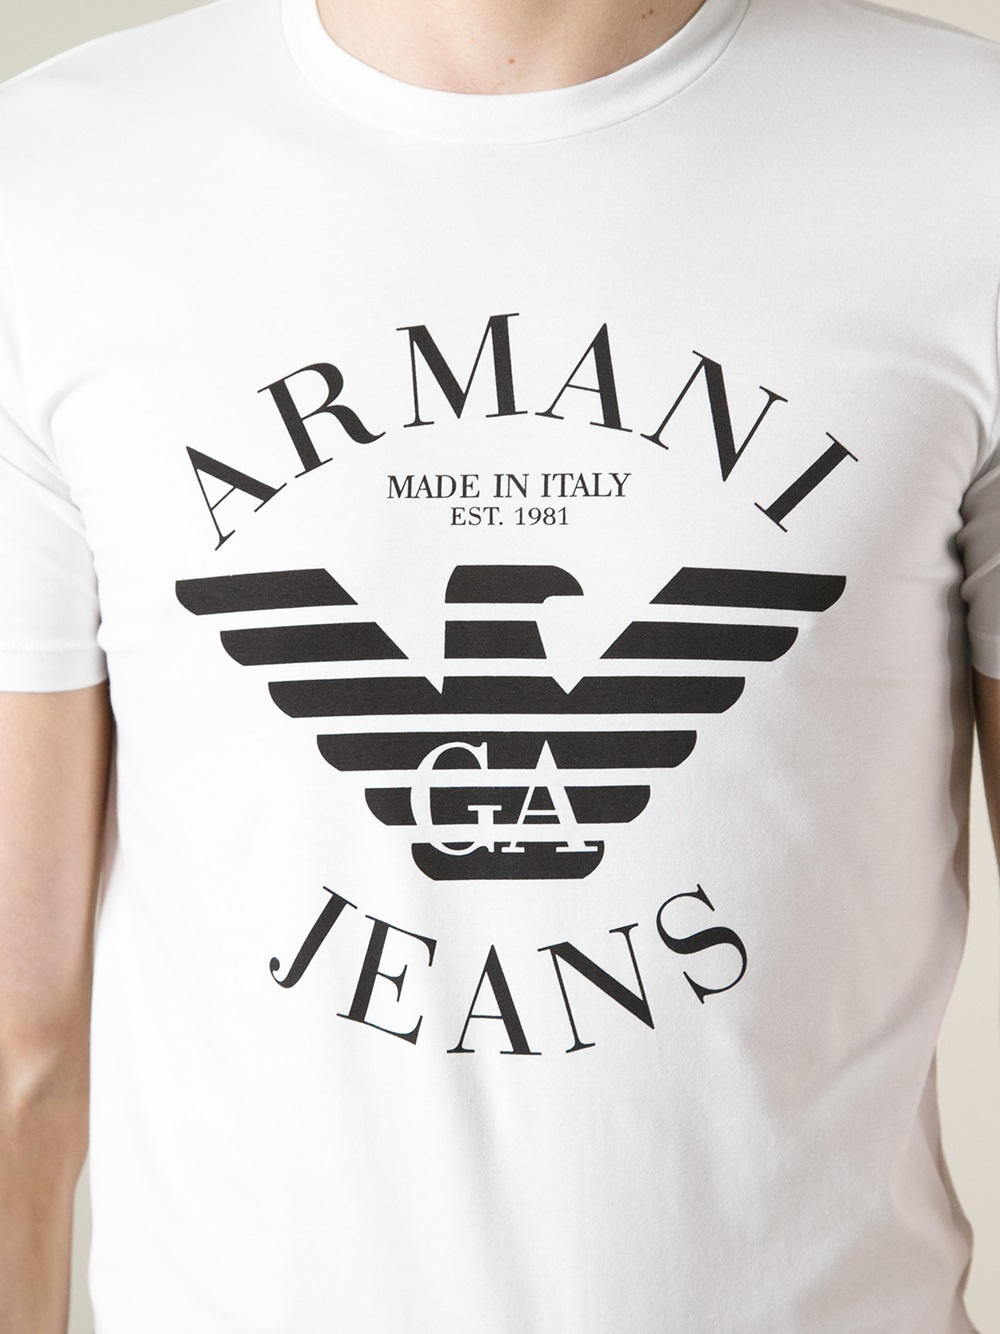 armani t shirt original - 52% OFF 